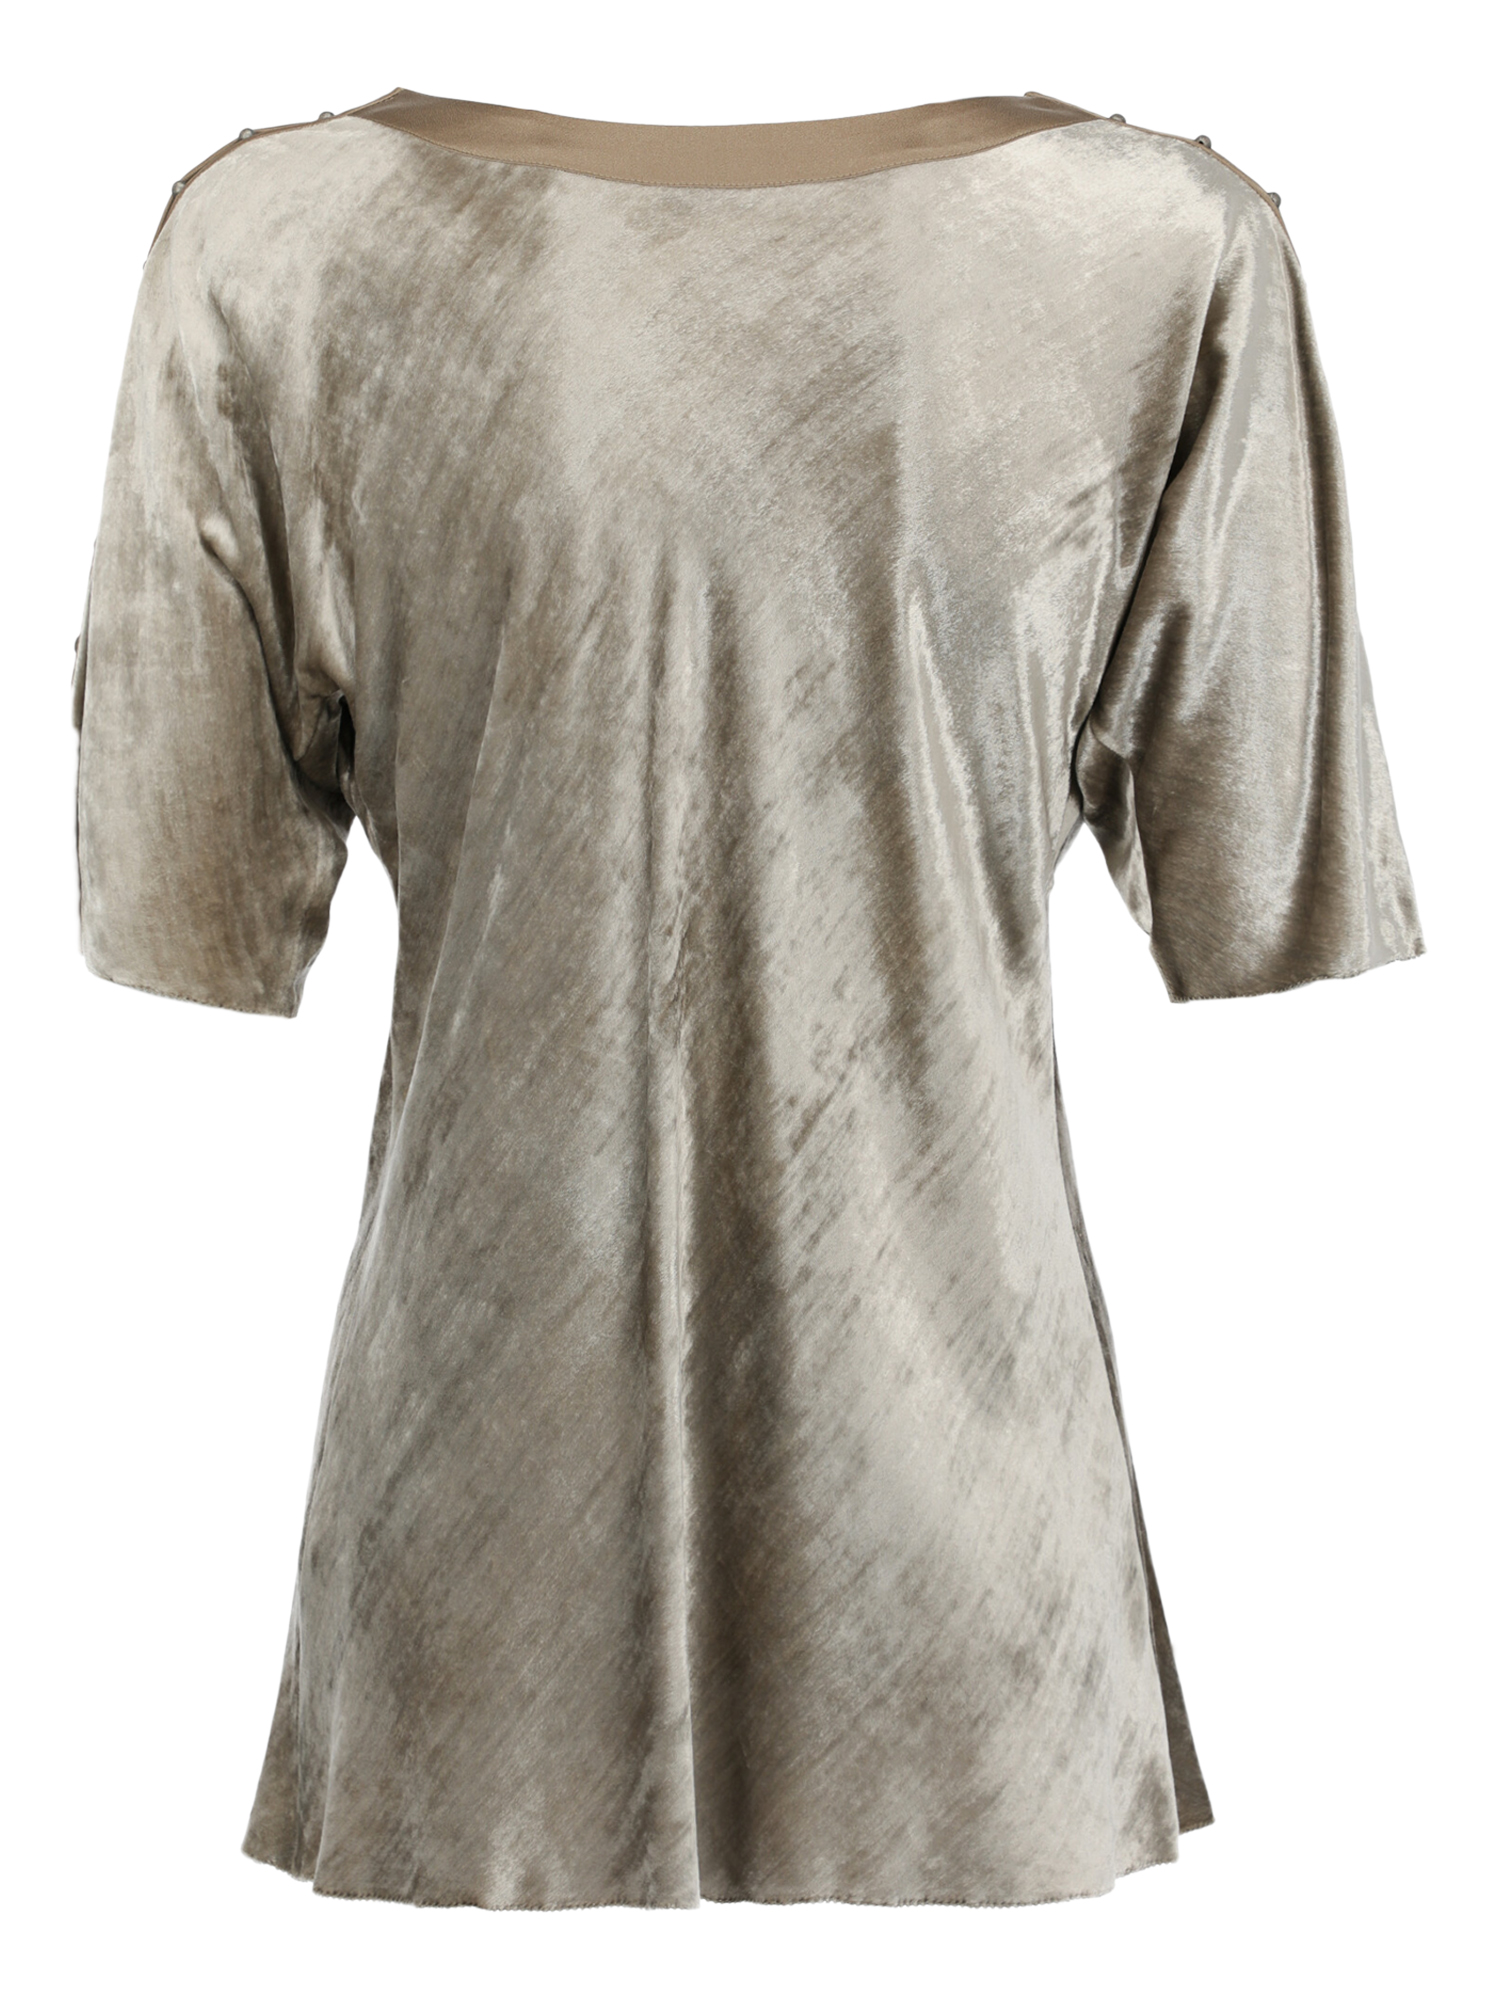 Bottega Veneta Special Price Women T-shirts and Top Grey IT 40 | eBay